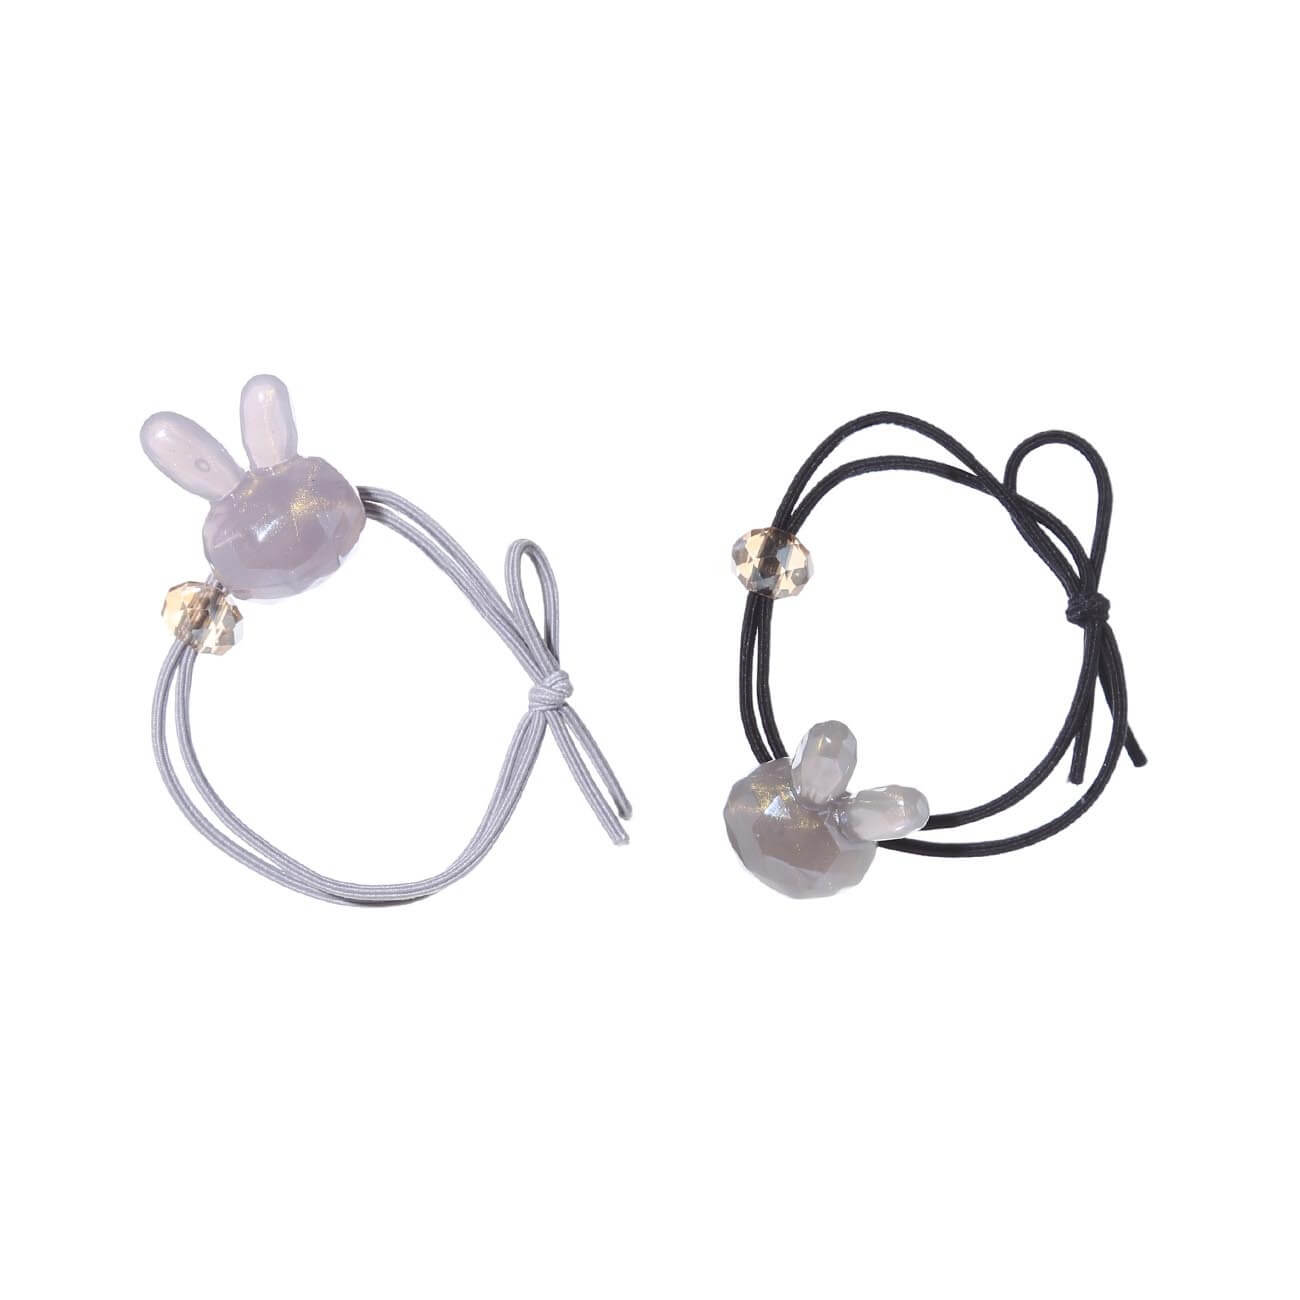 Elastic hair band, 6 cm, 2 pcs, children's, acrylic, gray / black, Bunnies, Gracile изображение № 1